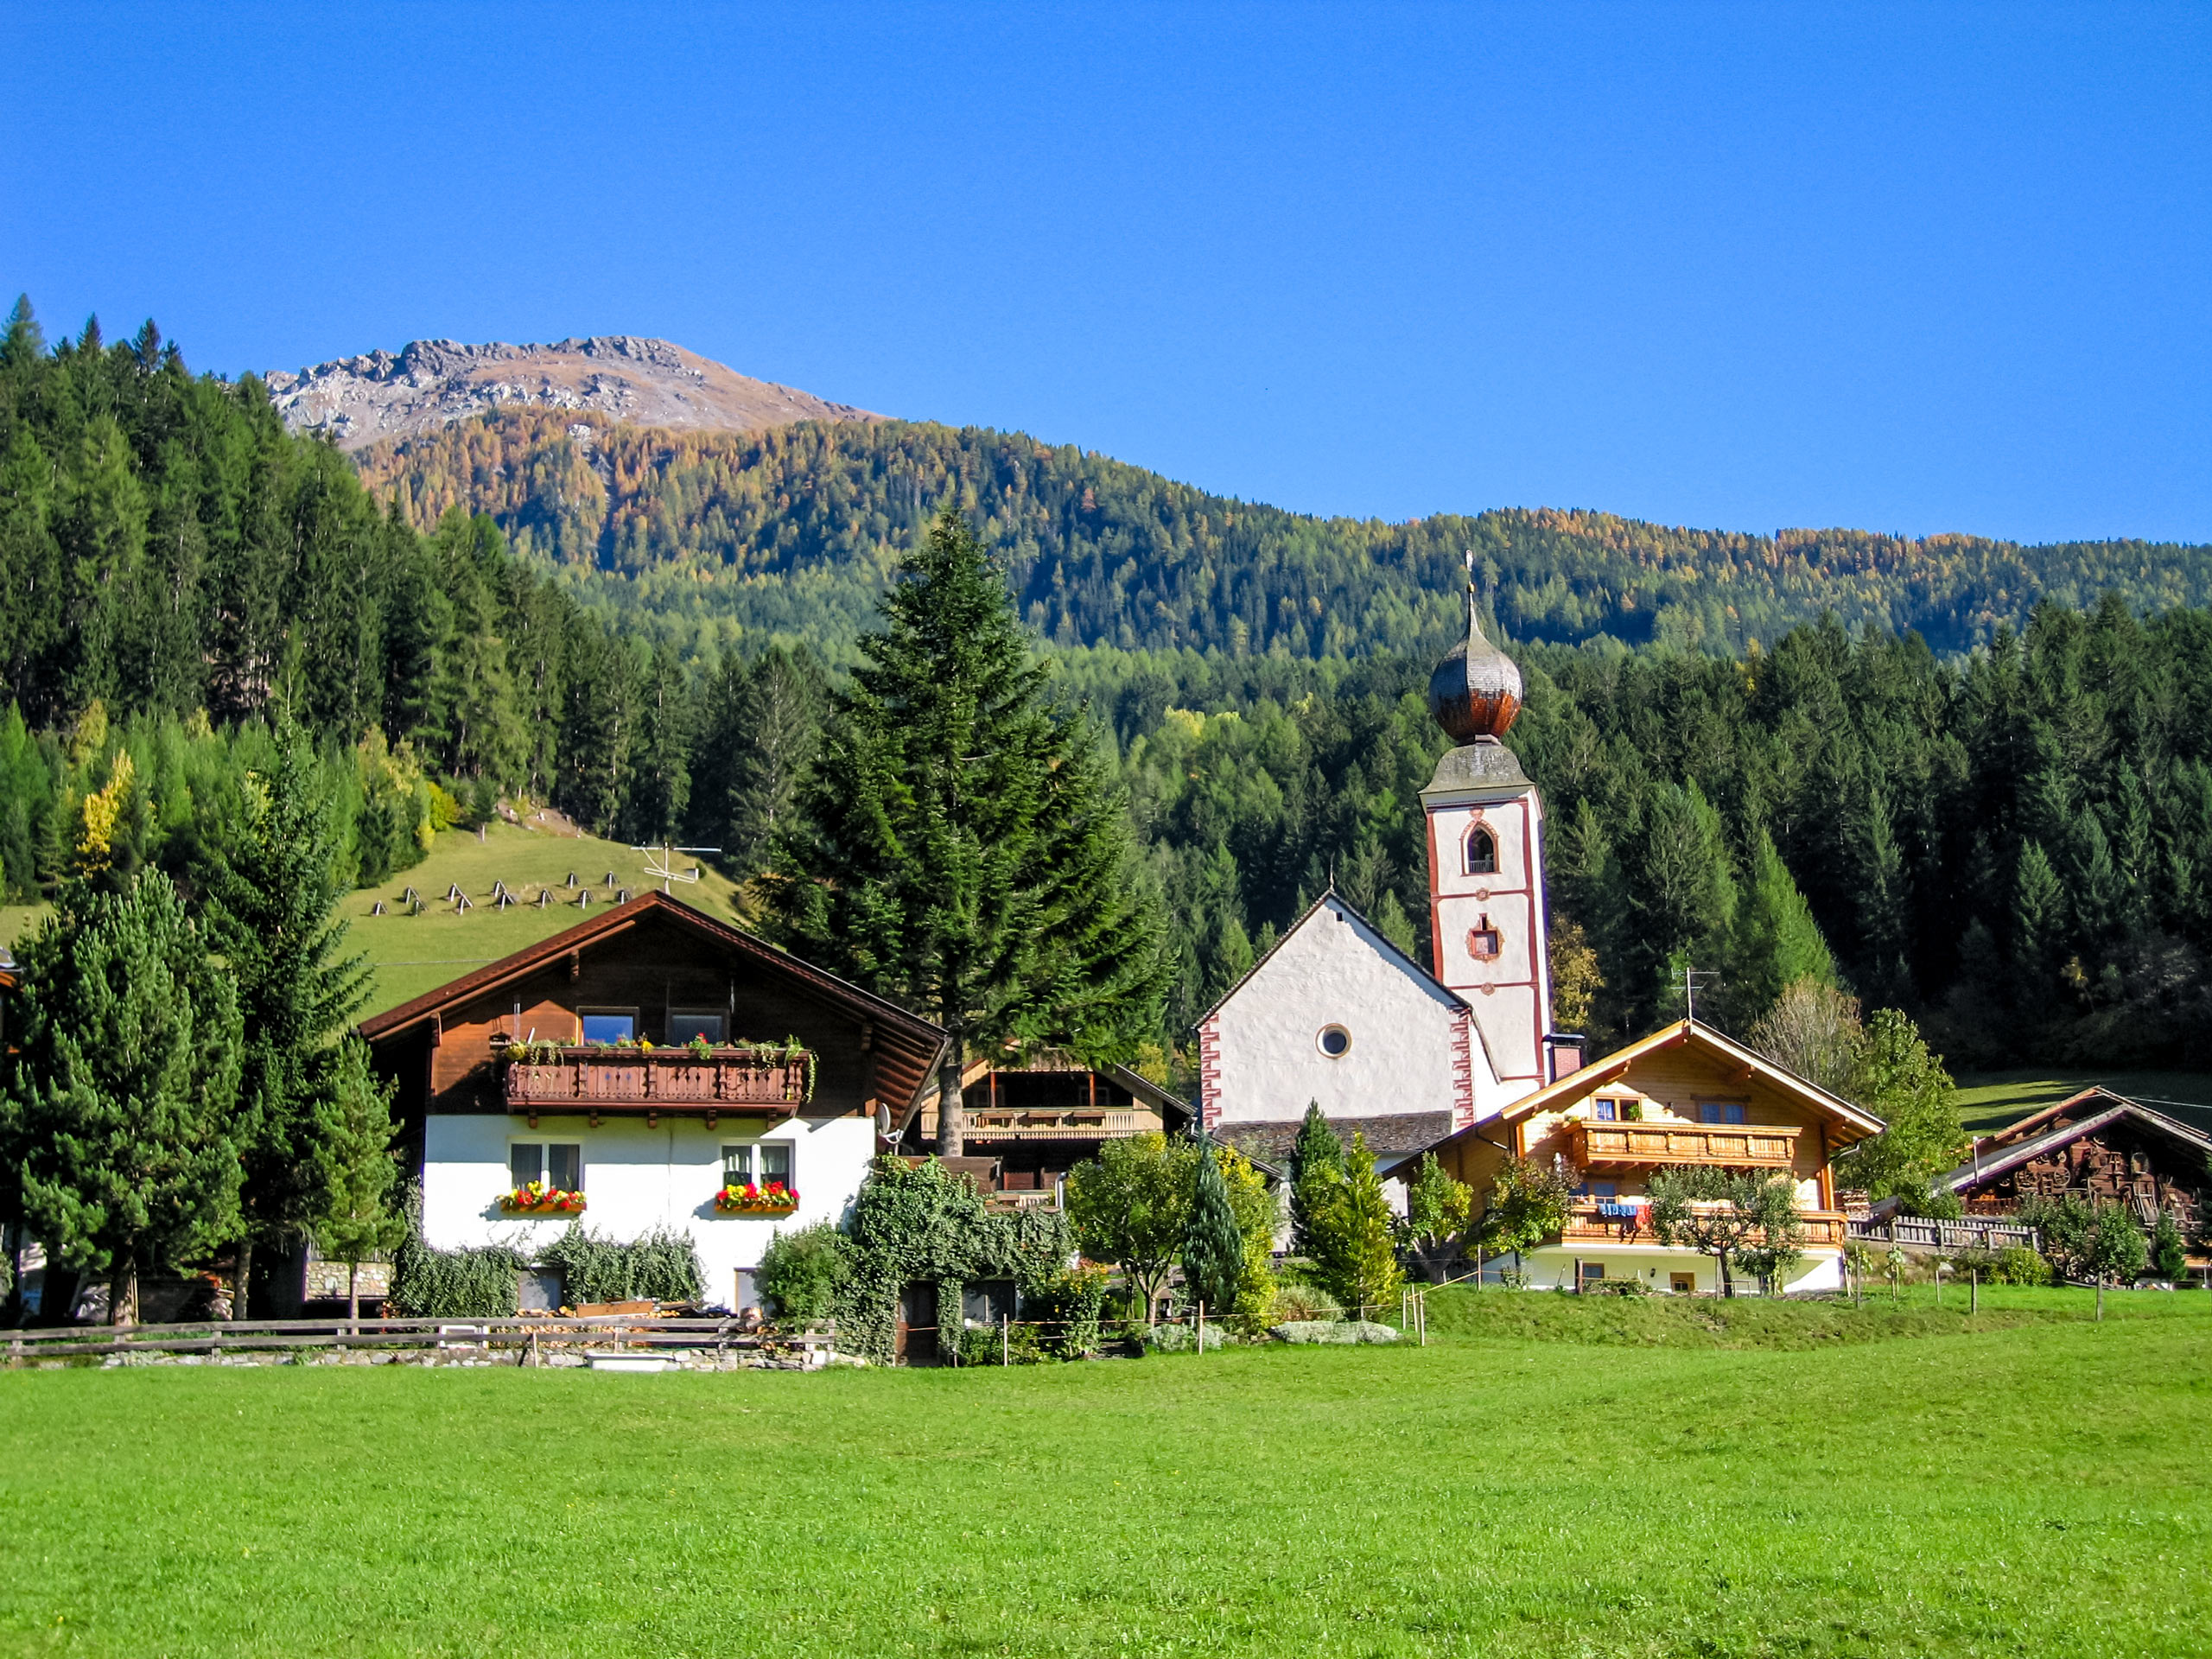 Mölltal church in the hills of austria